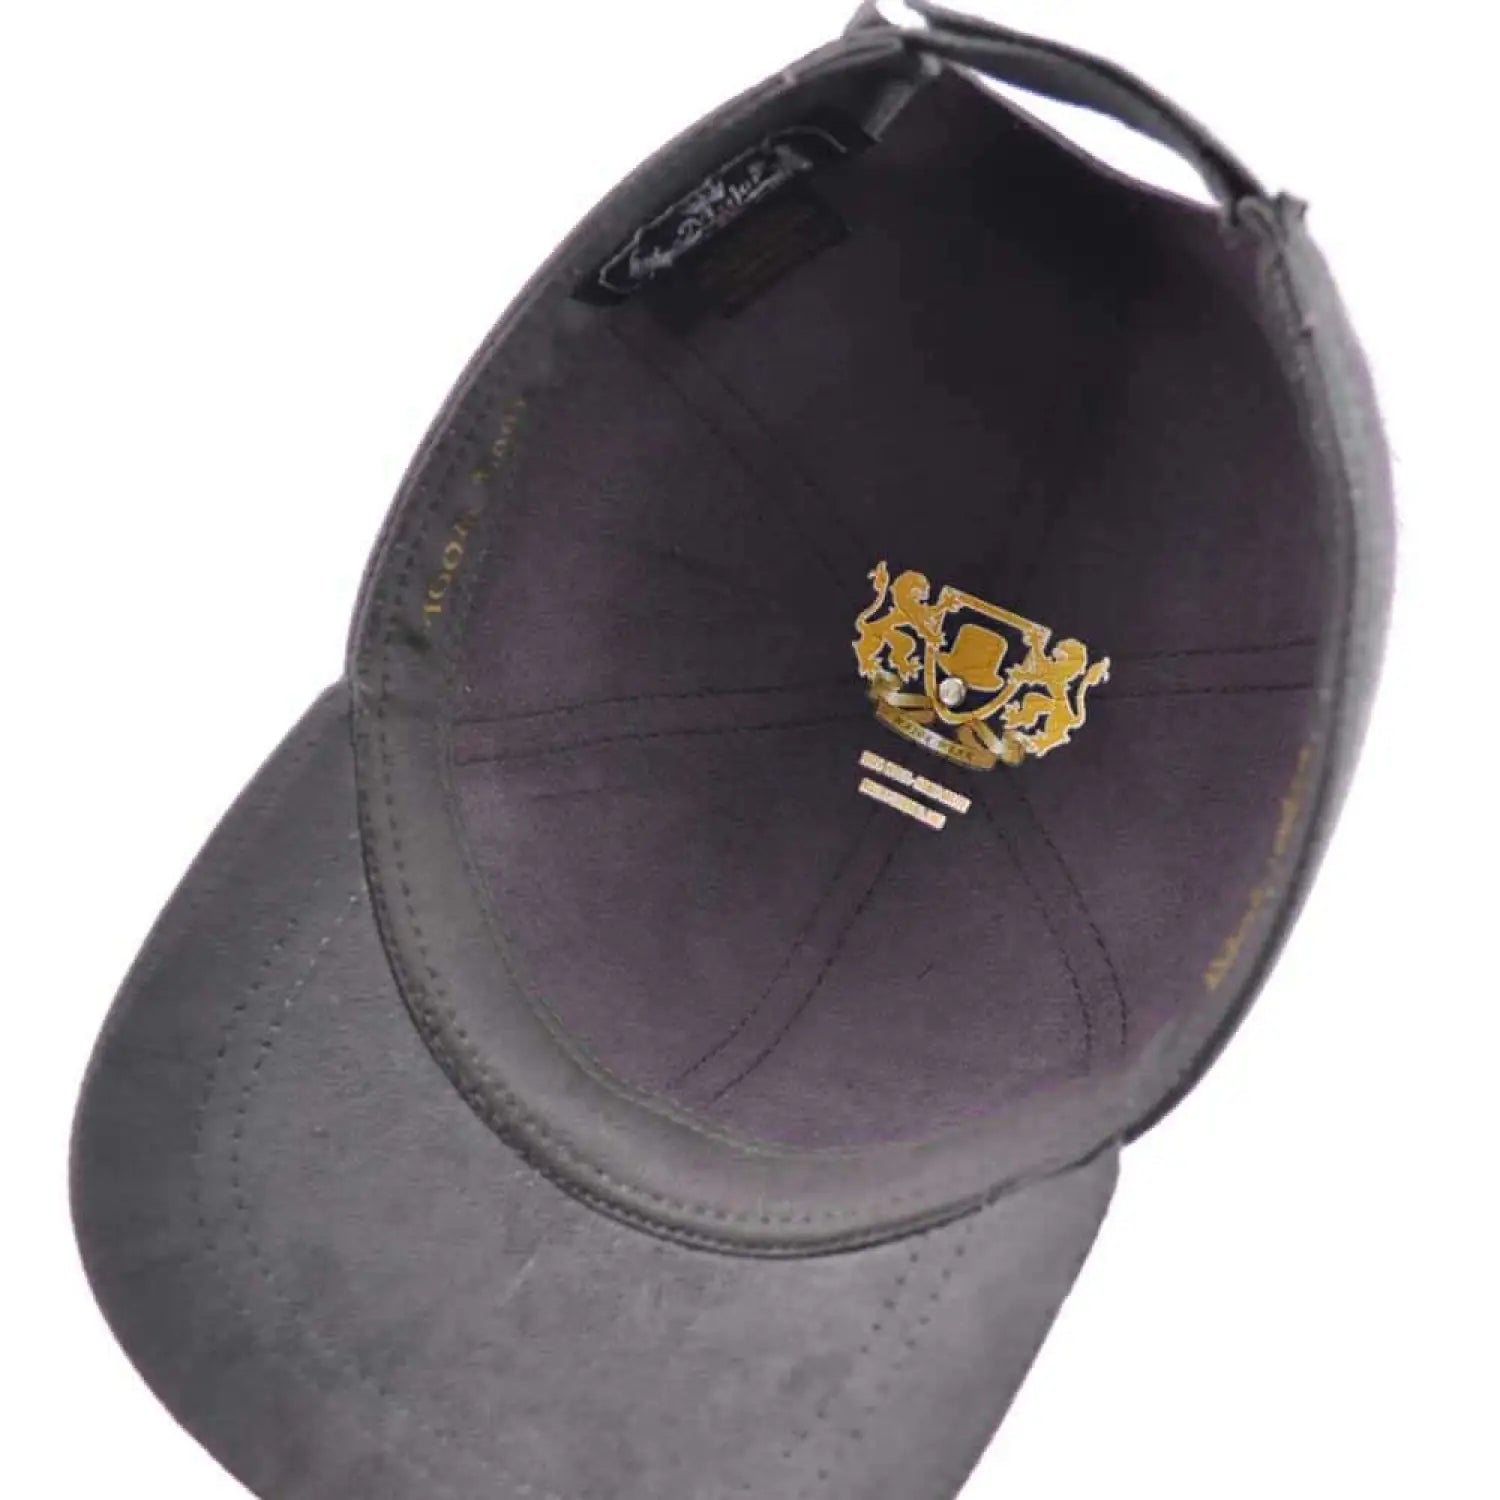 Stylish black wool felt baseball cap with gold lion emblem